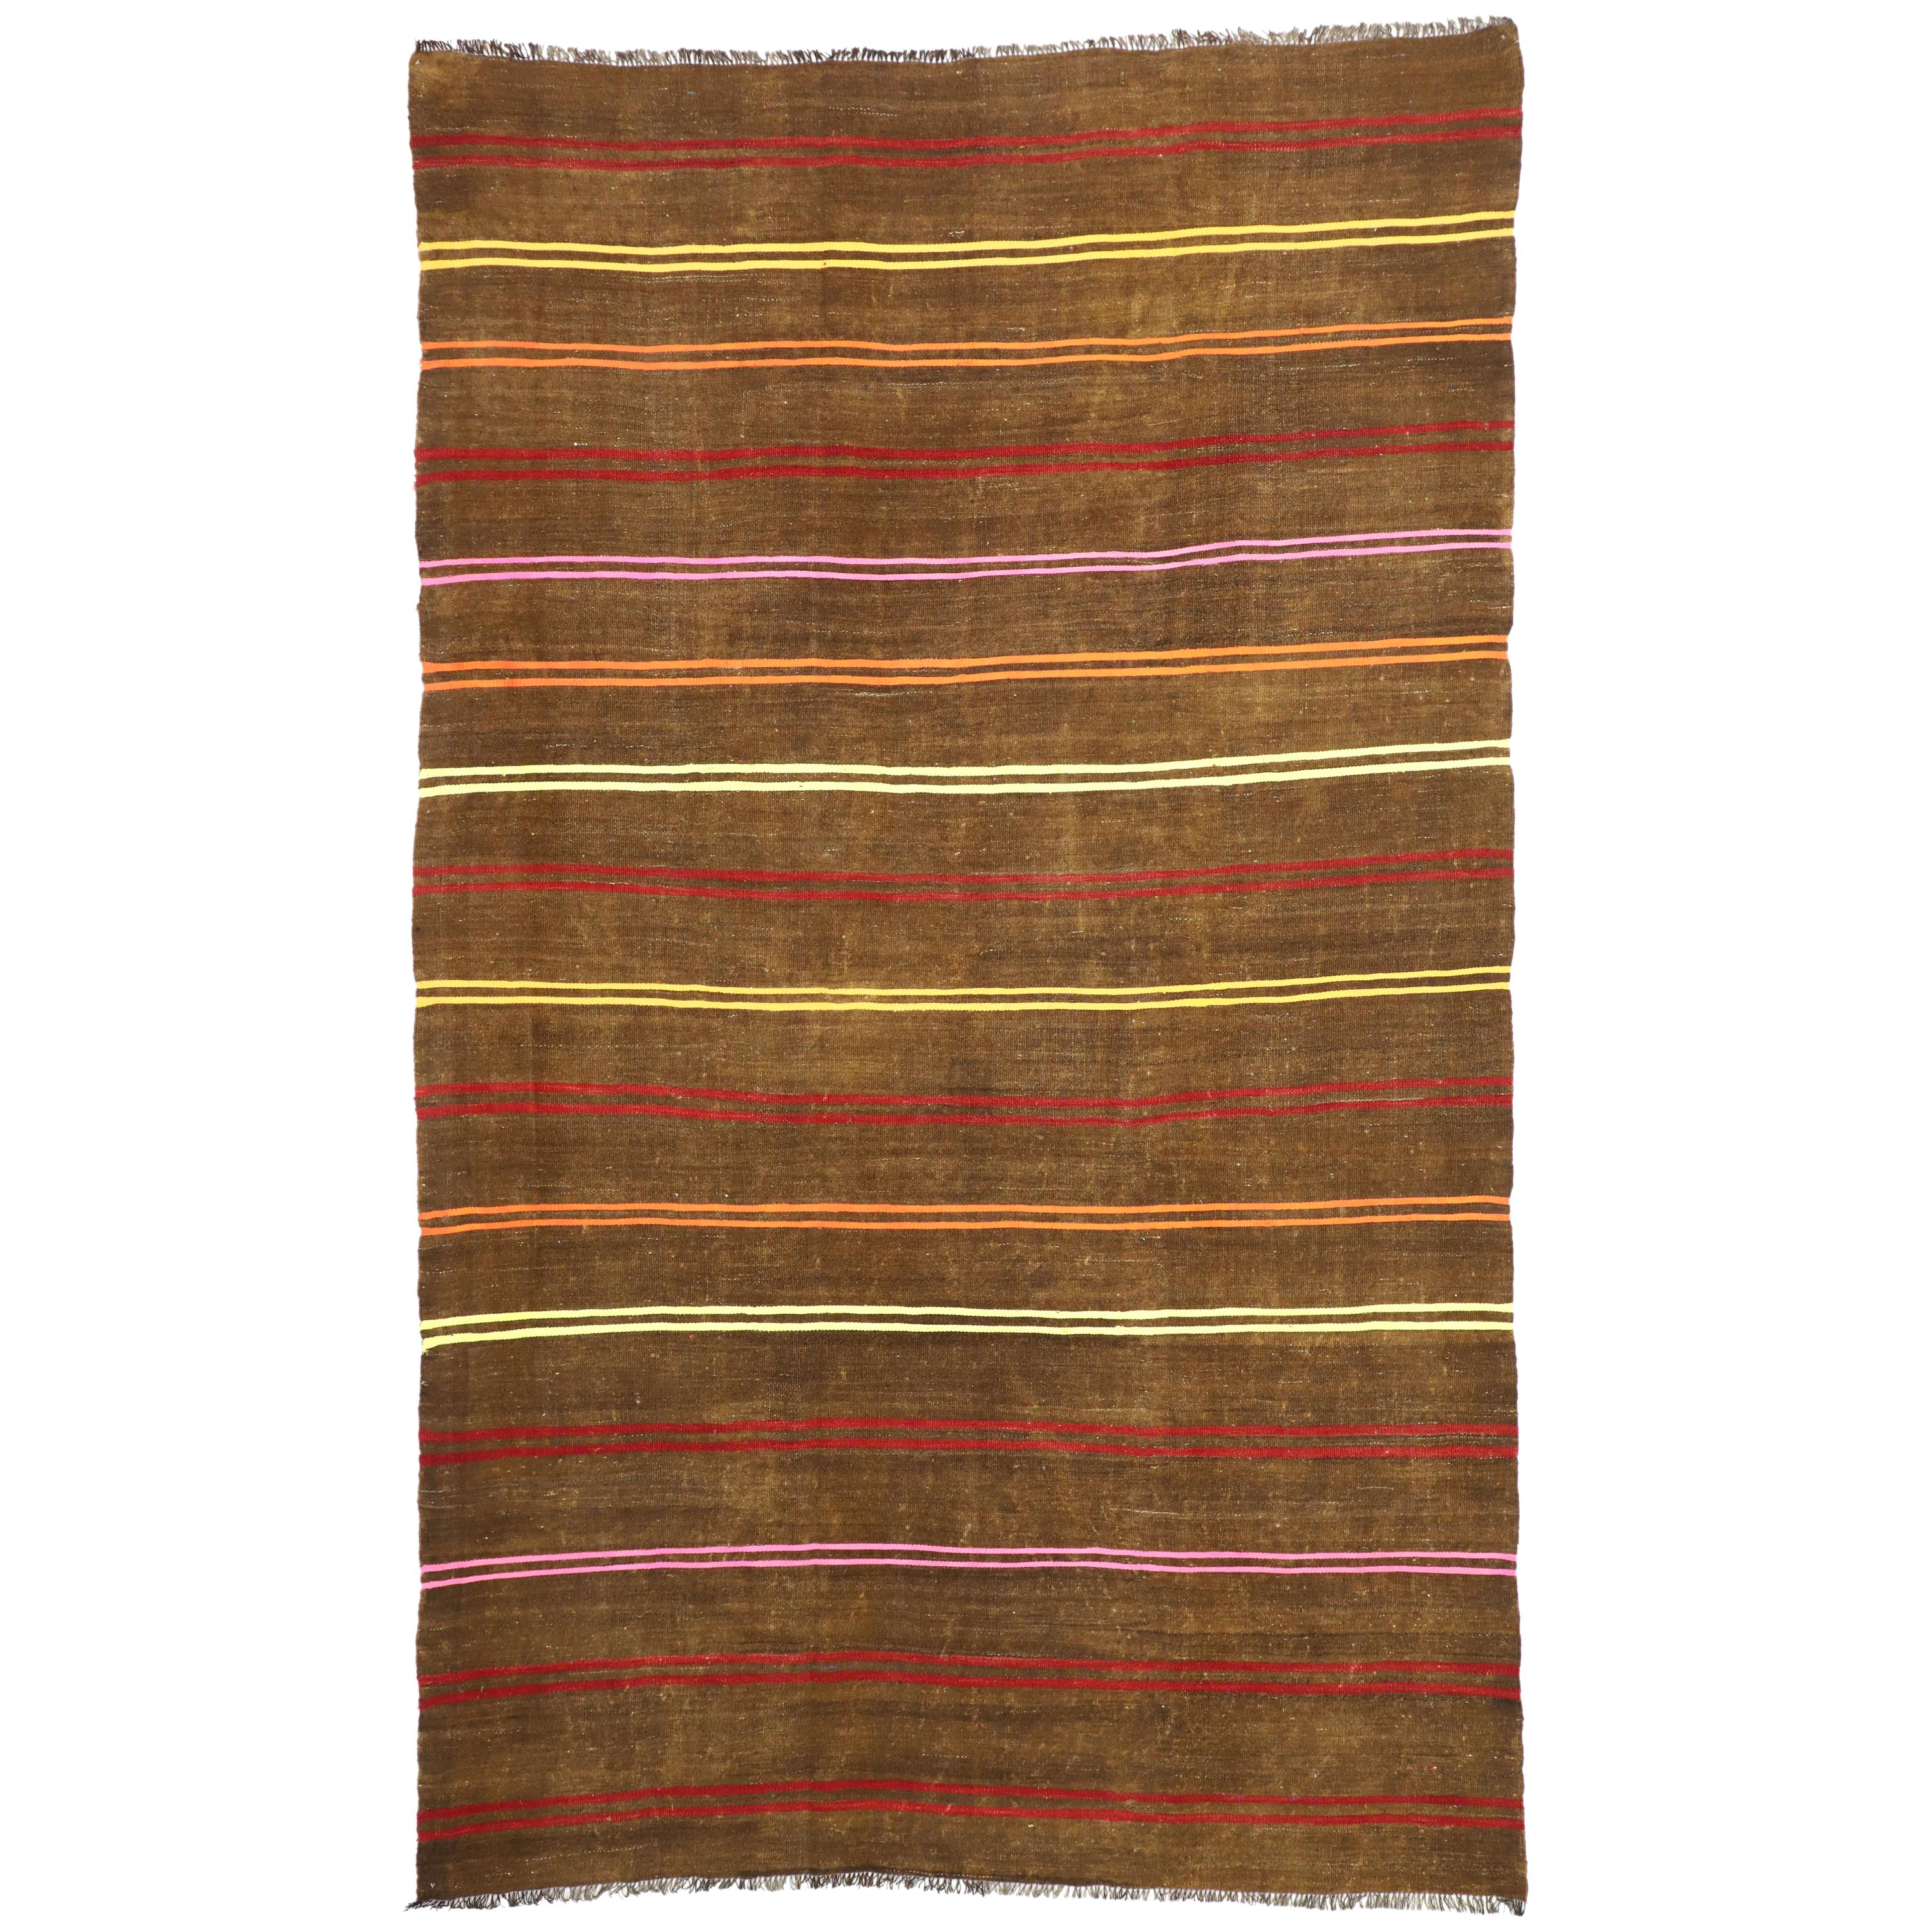 Vintage Turkish Striped Kilim Area Rug with Bohemian Tribal Style